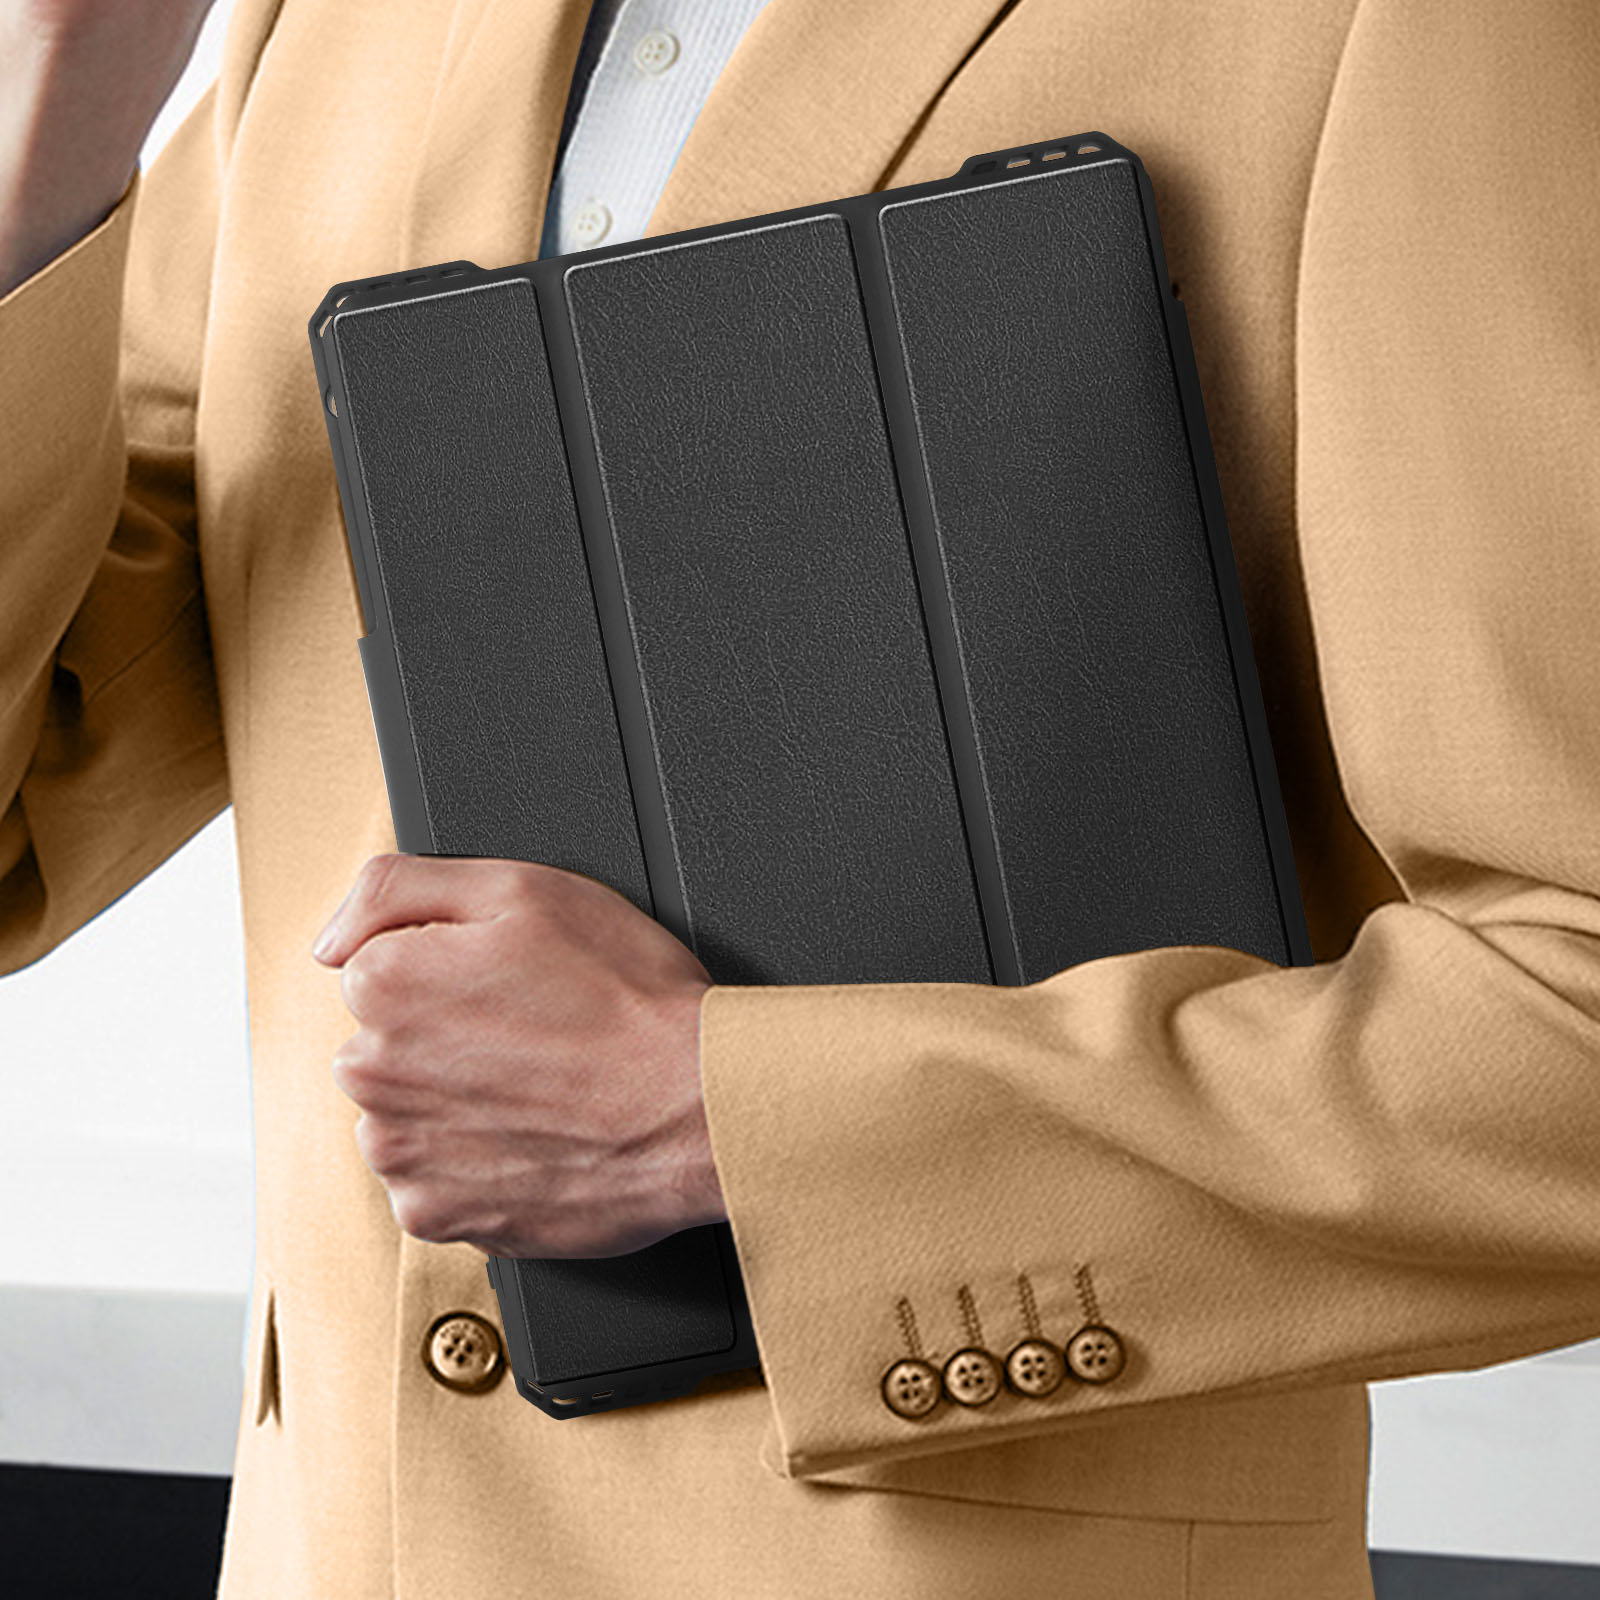 Akashi Etui Folio Noir iPad 10.2 2018 / 2020 - Etui tablette - Garantie 3  ans LDLC